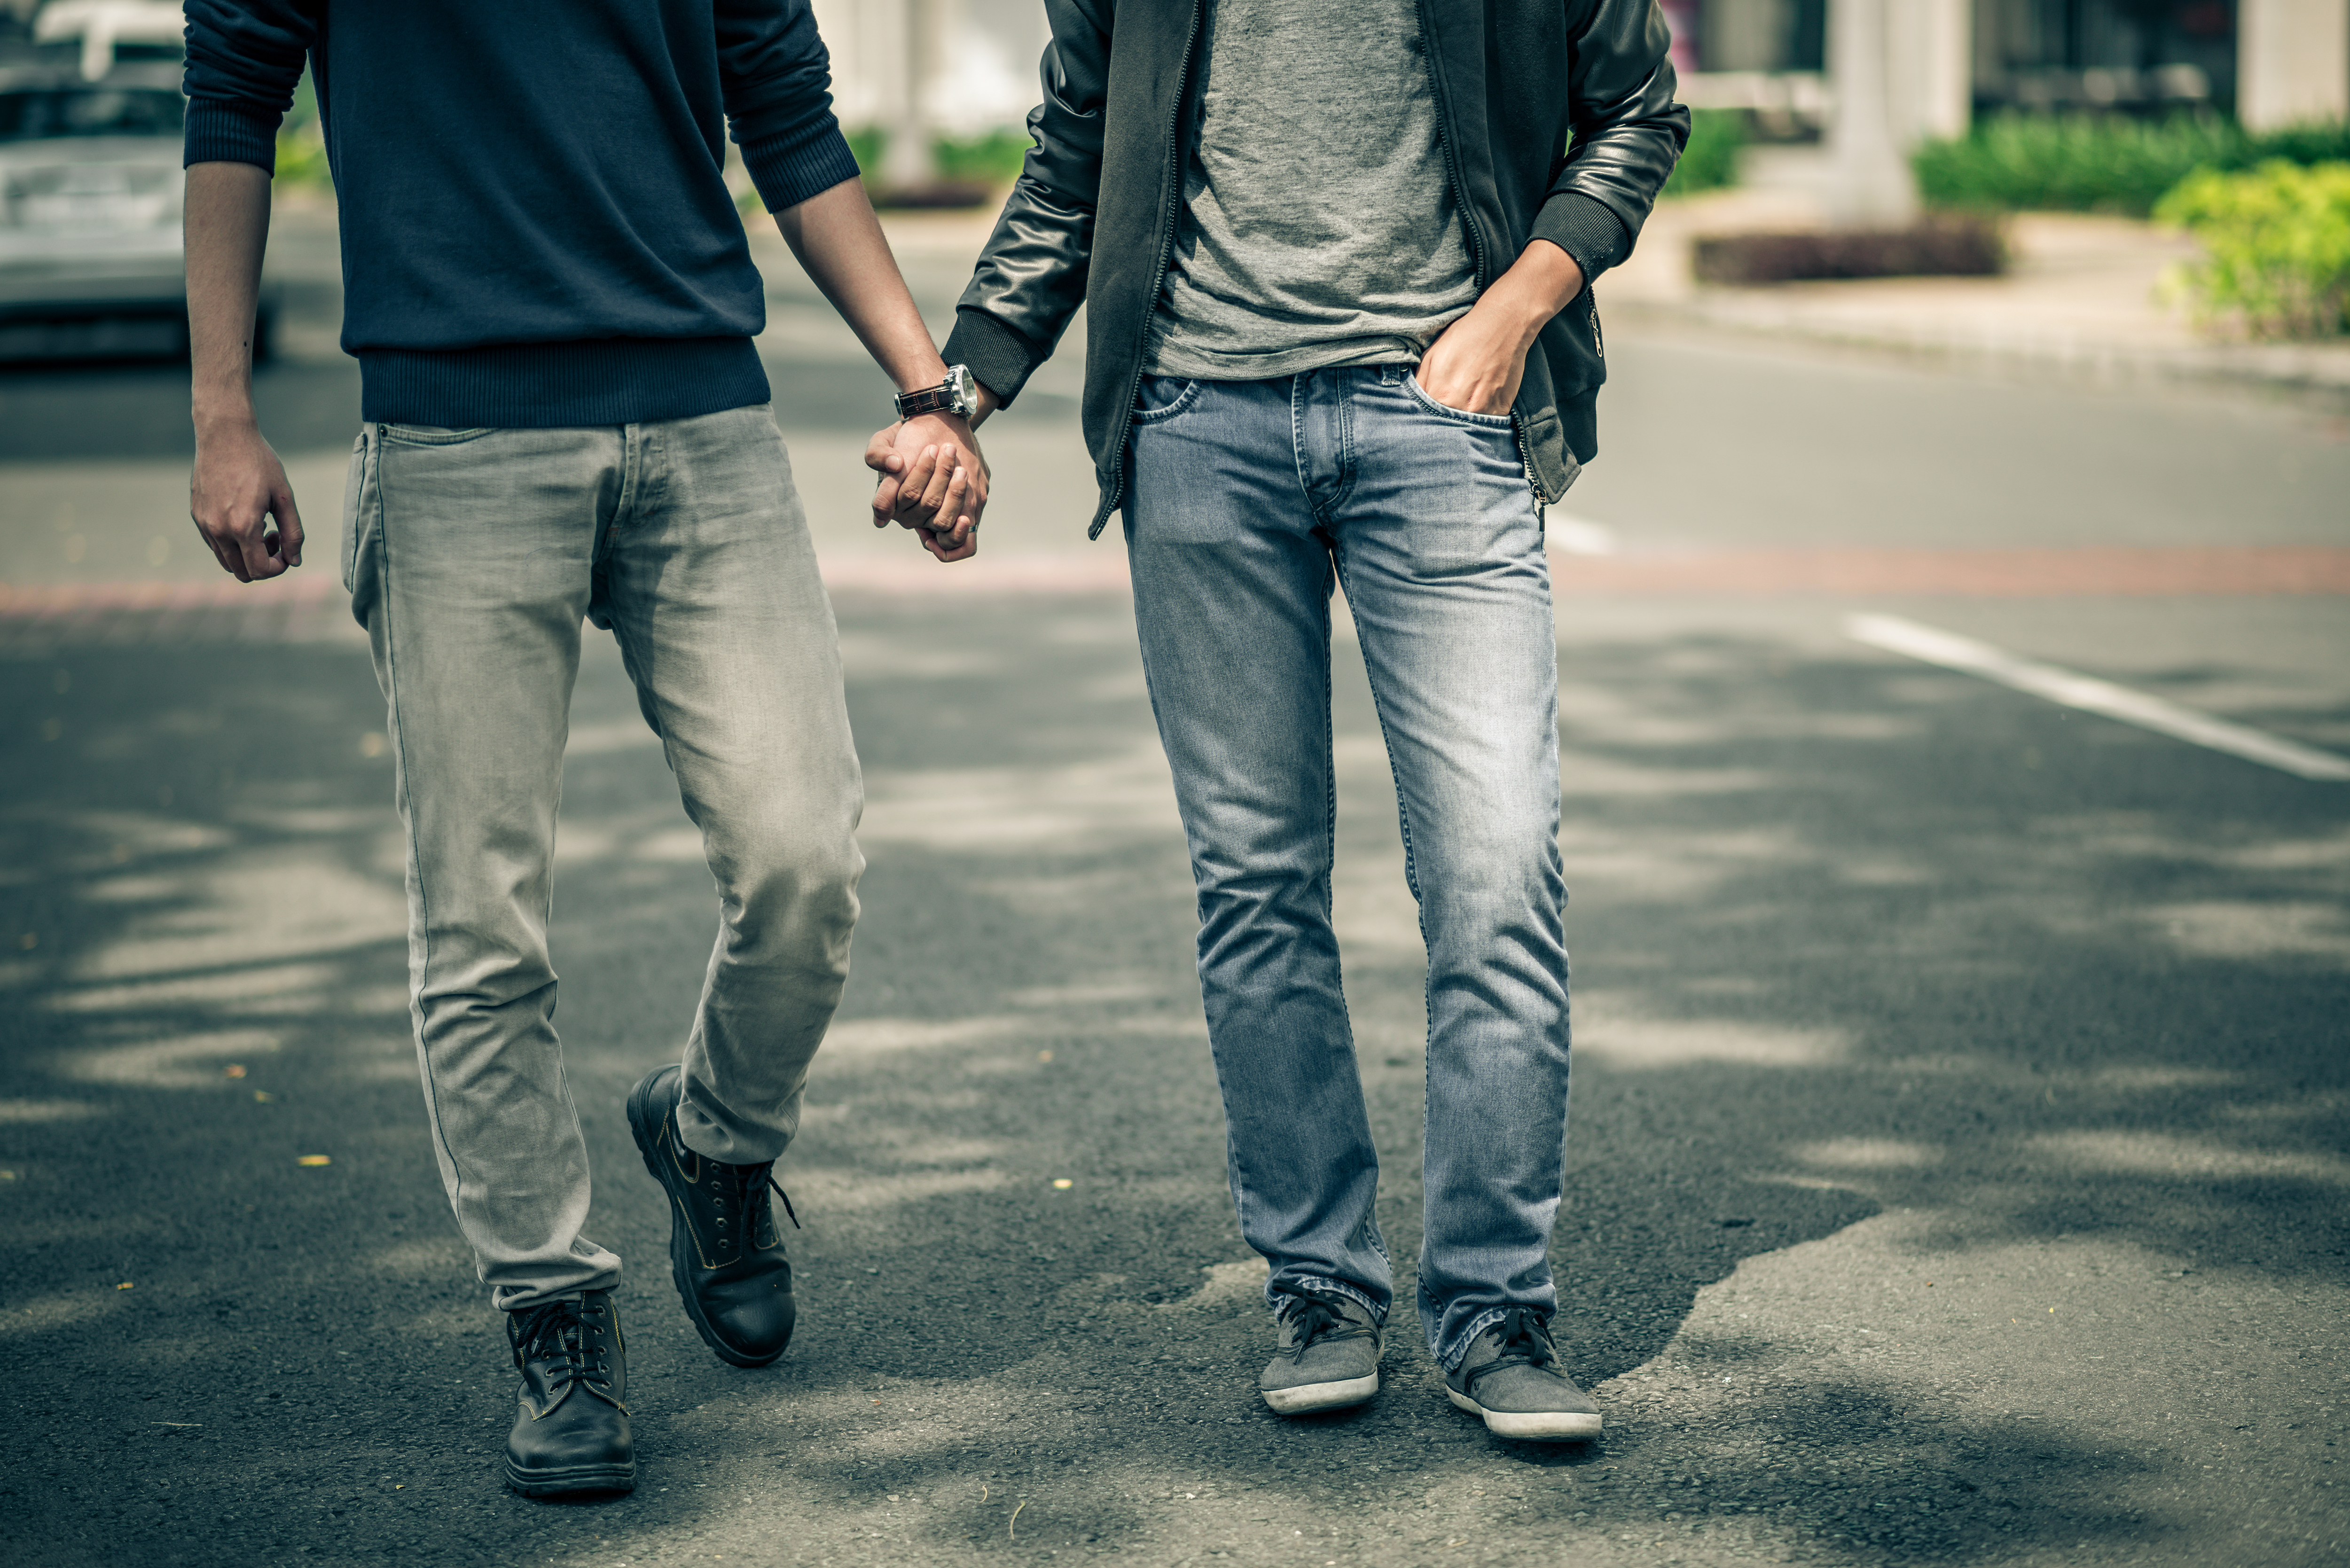 Two men holding hands | Source: Shutterstock